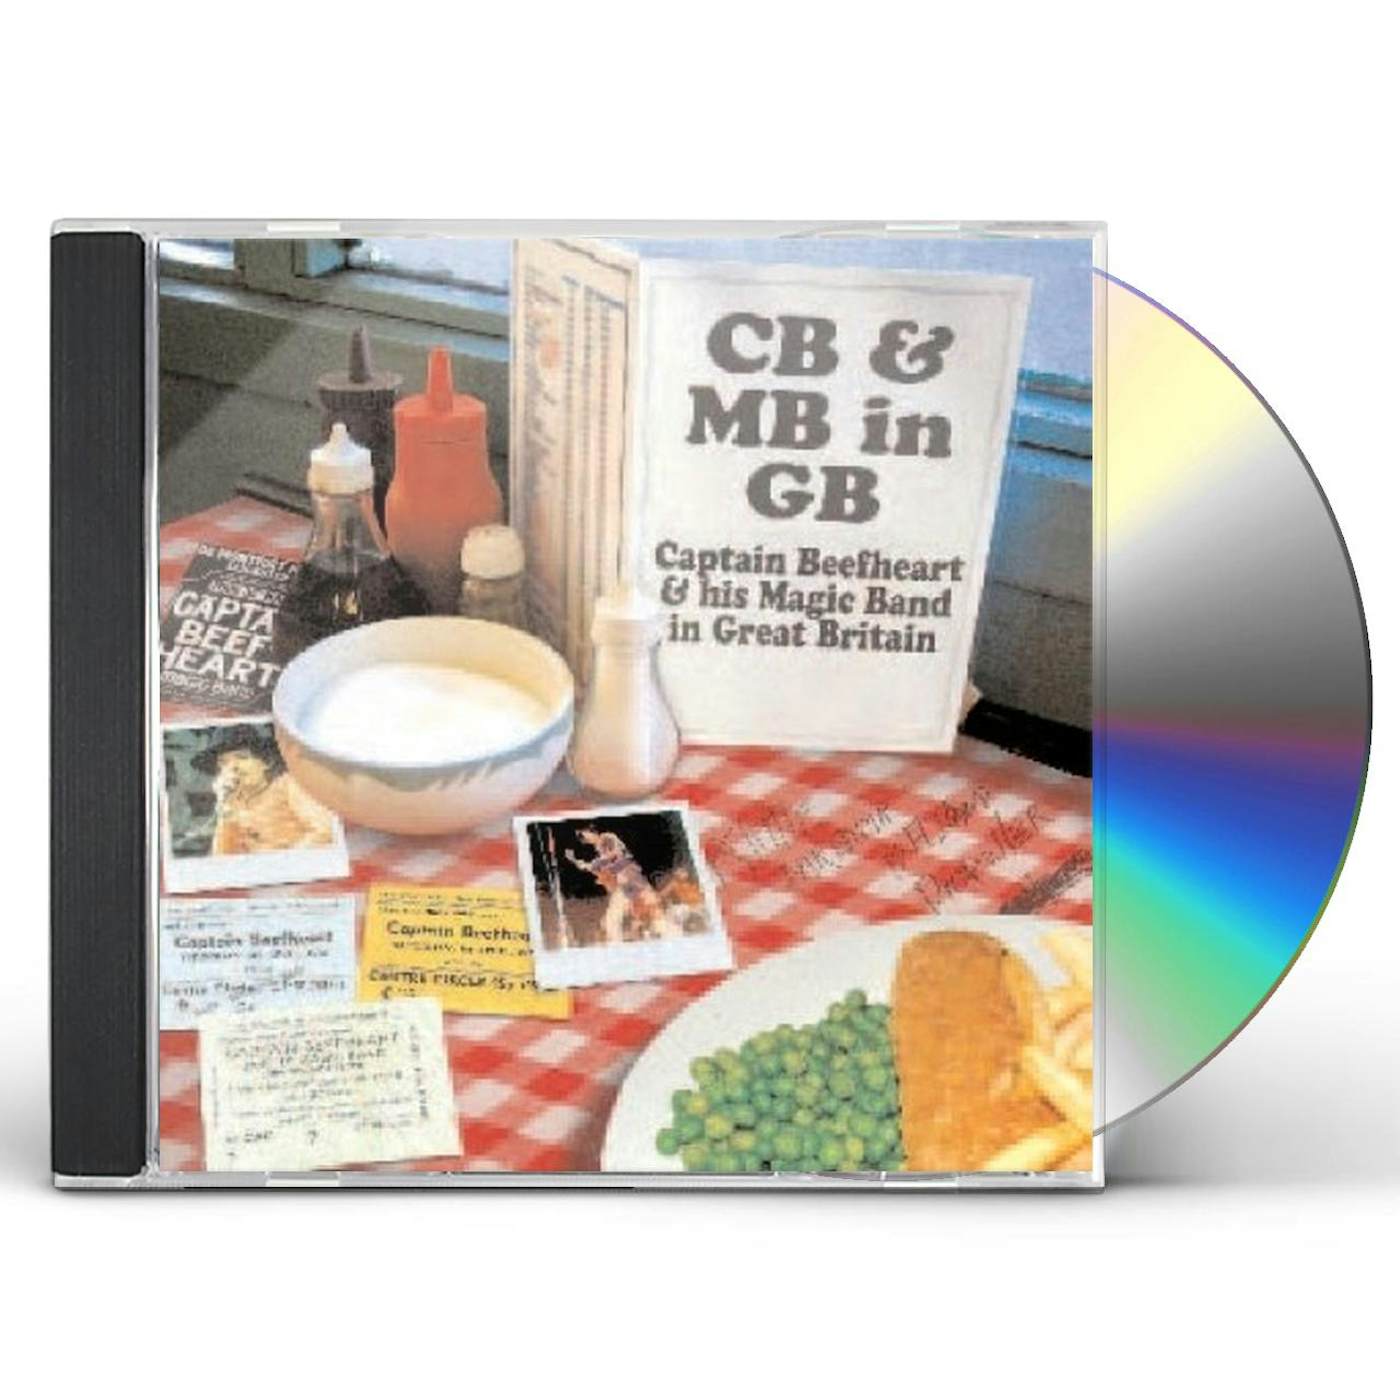 Captain Beefheart & His Magic Band CB & MB LIVE IN GB CD